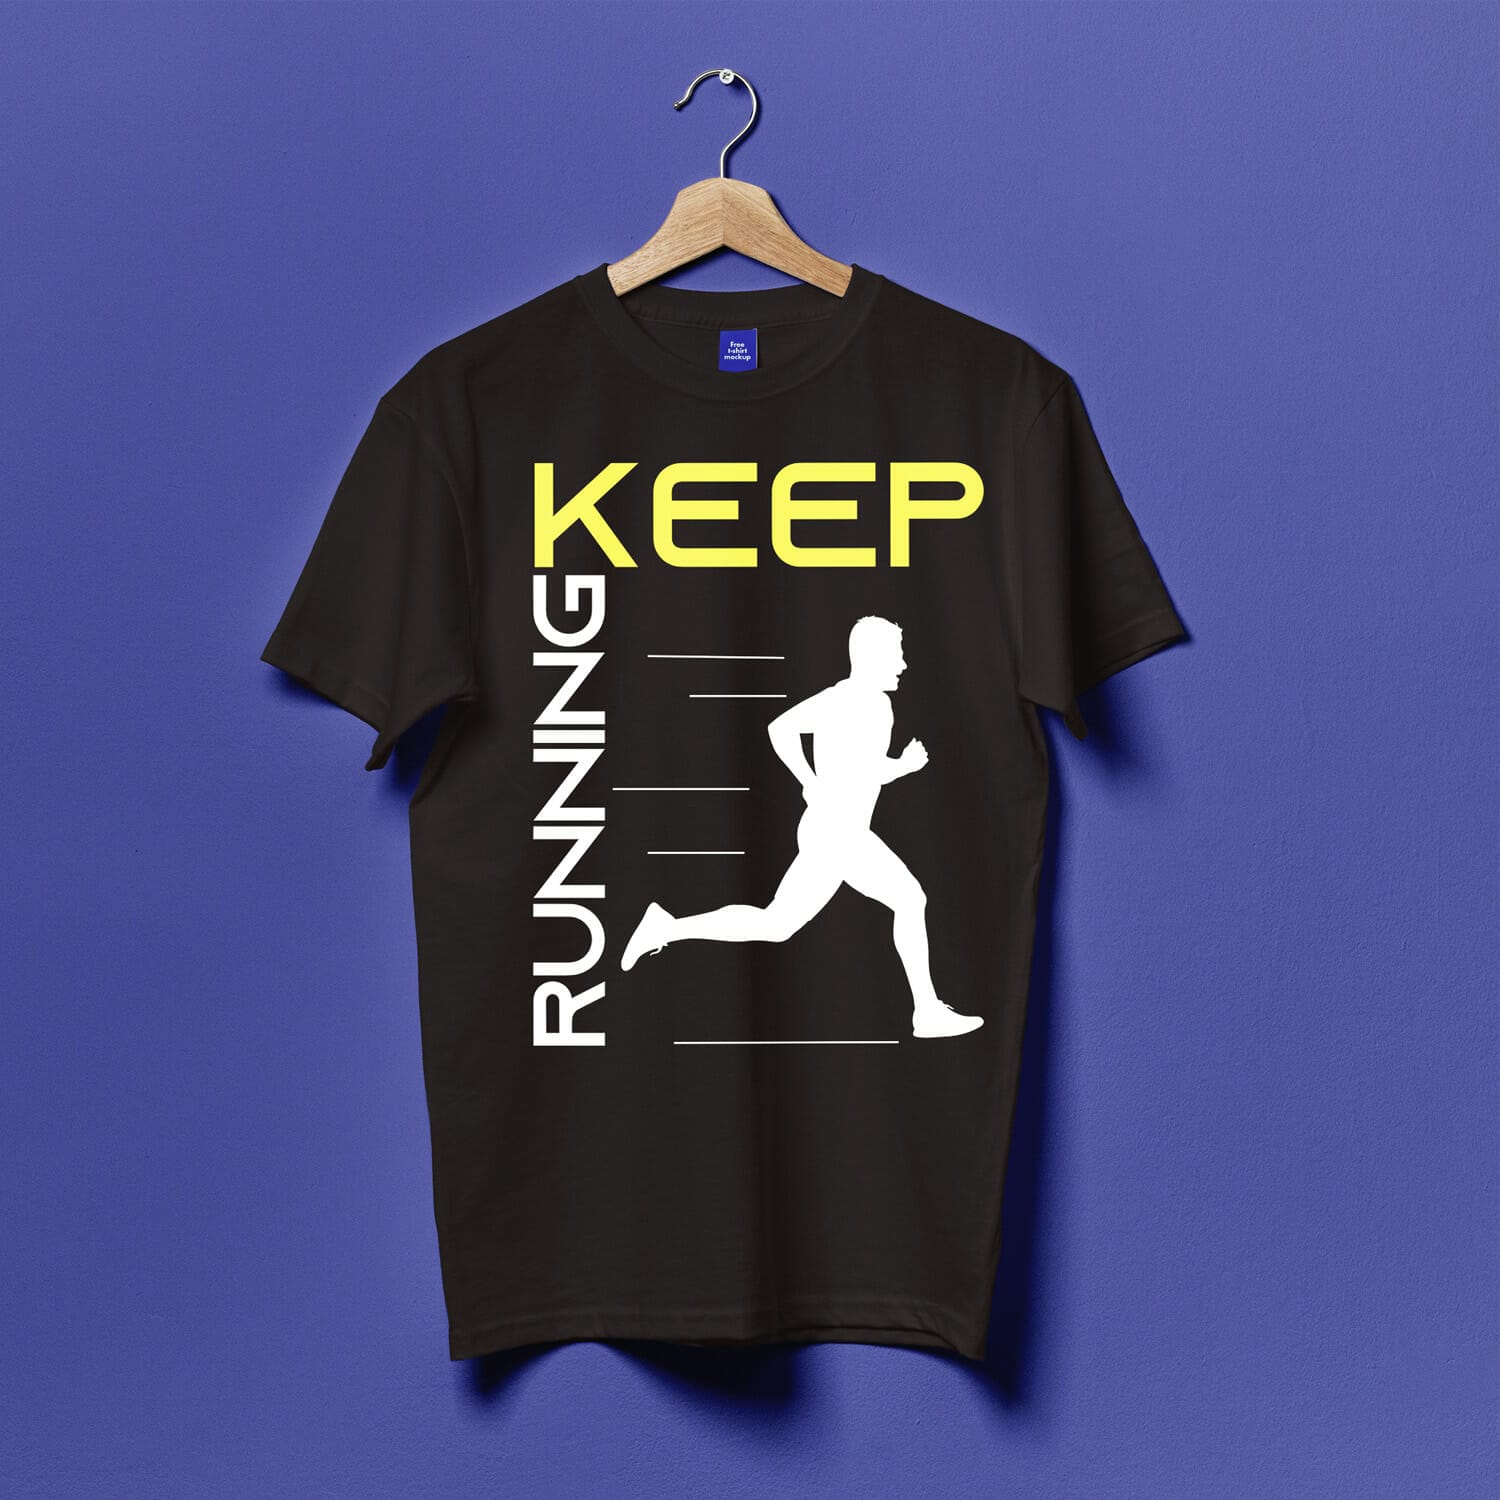 Keep Running Tshirt Design